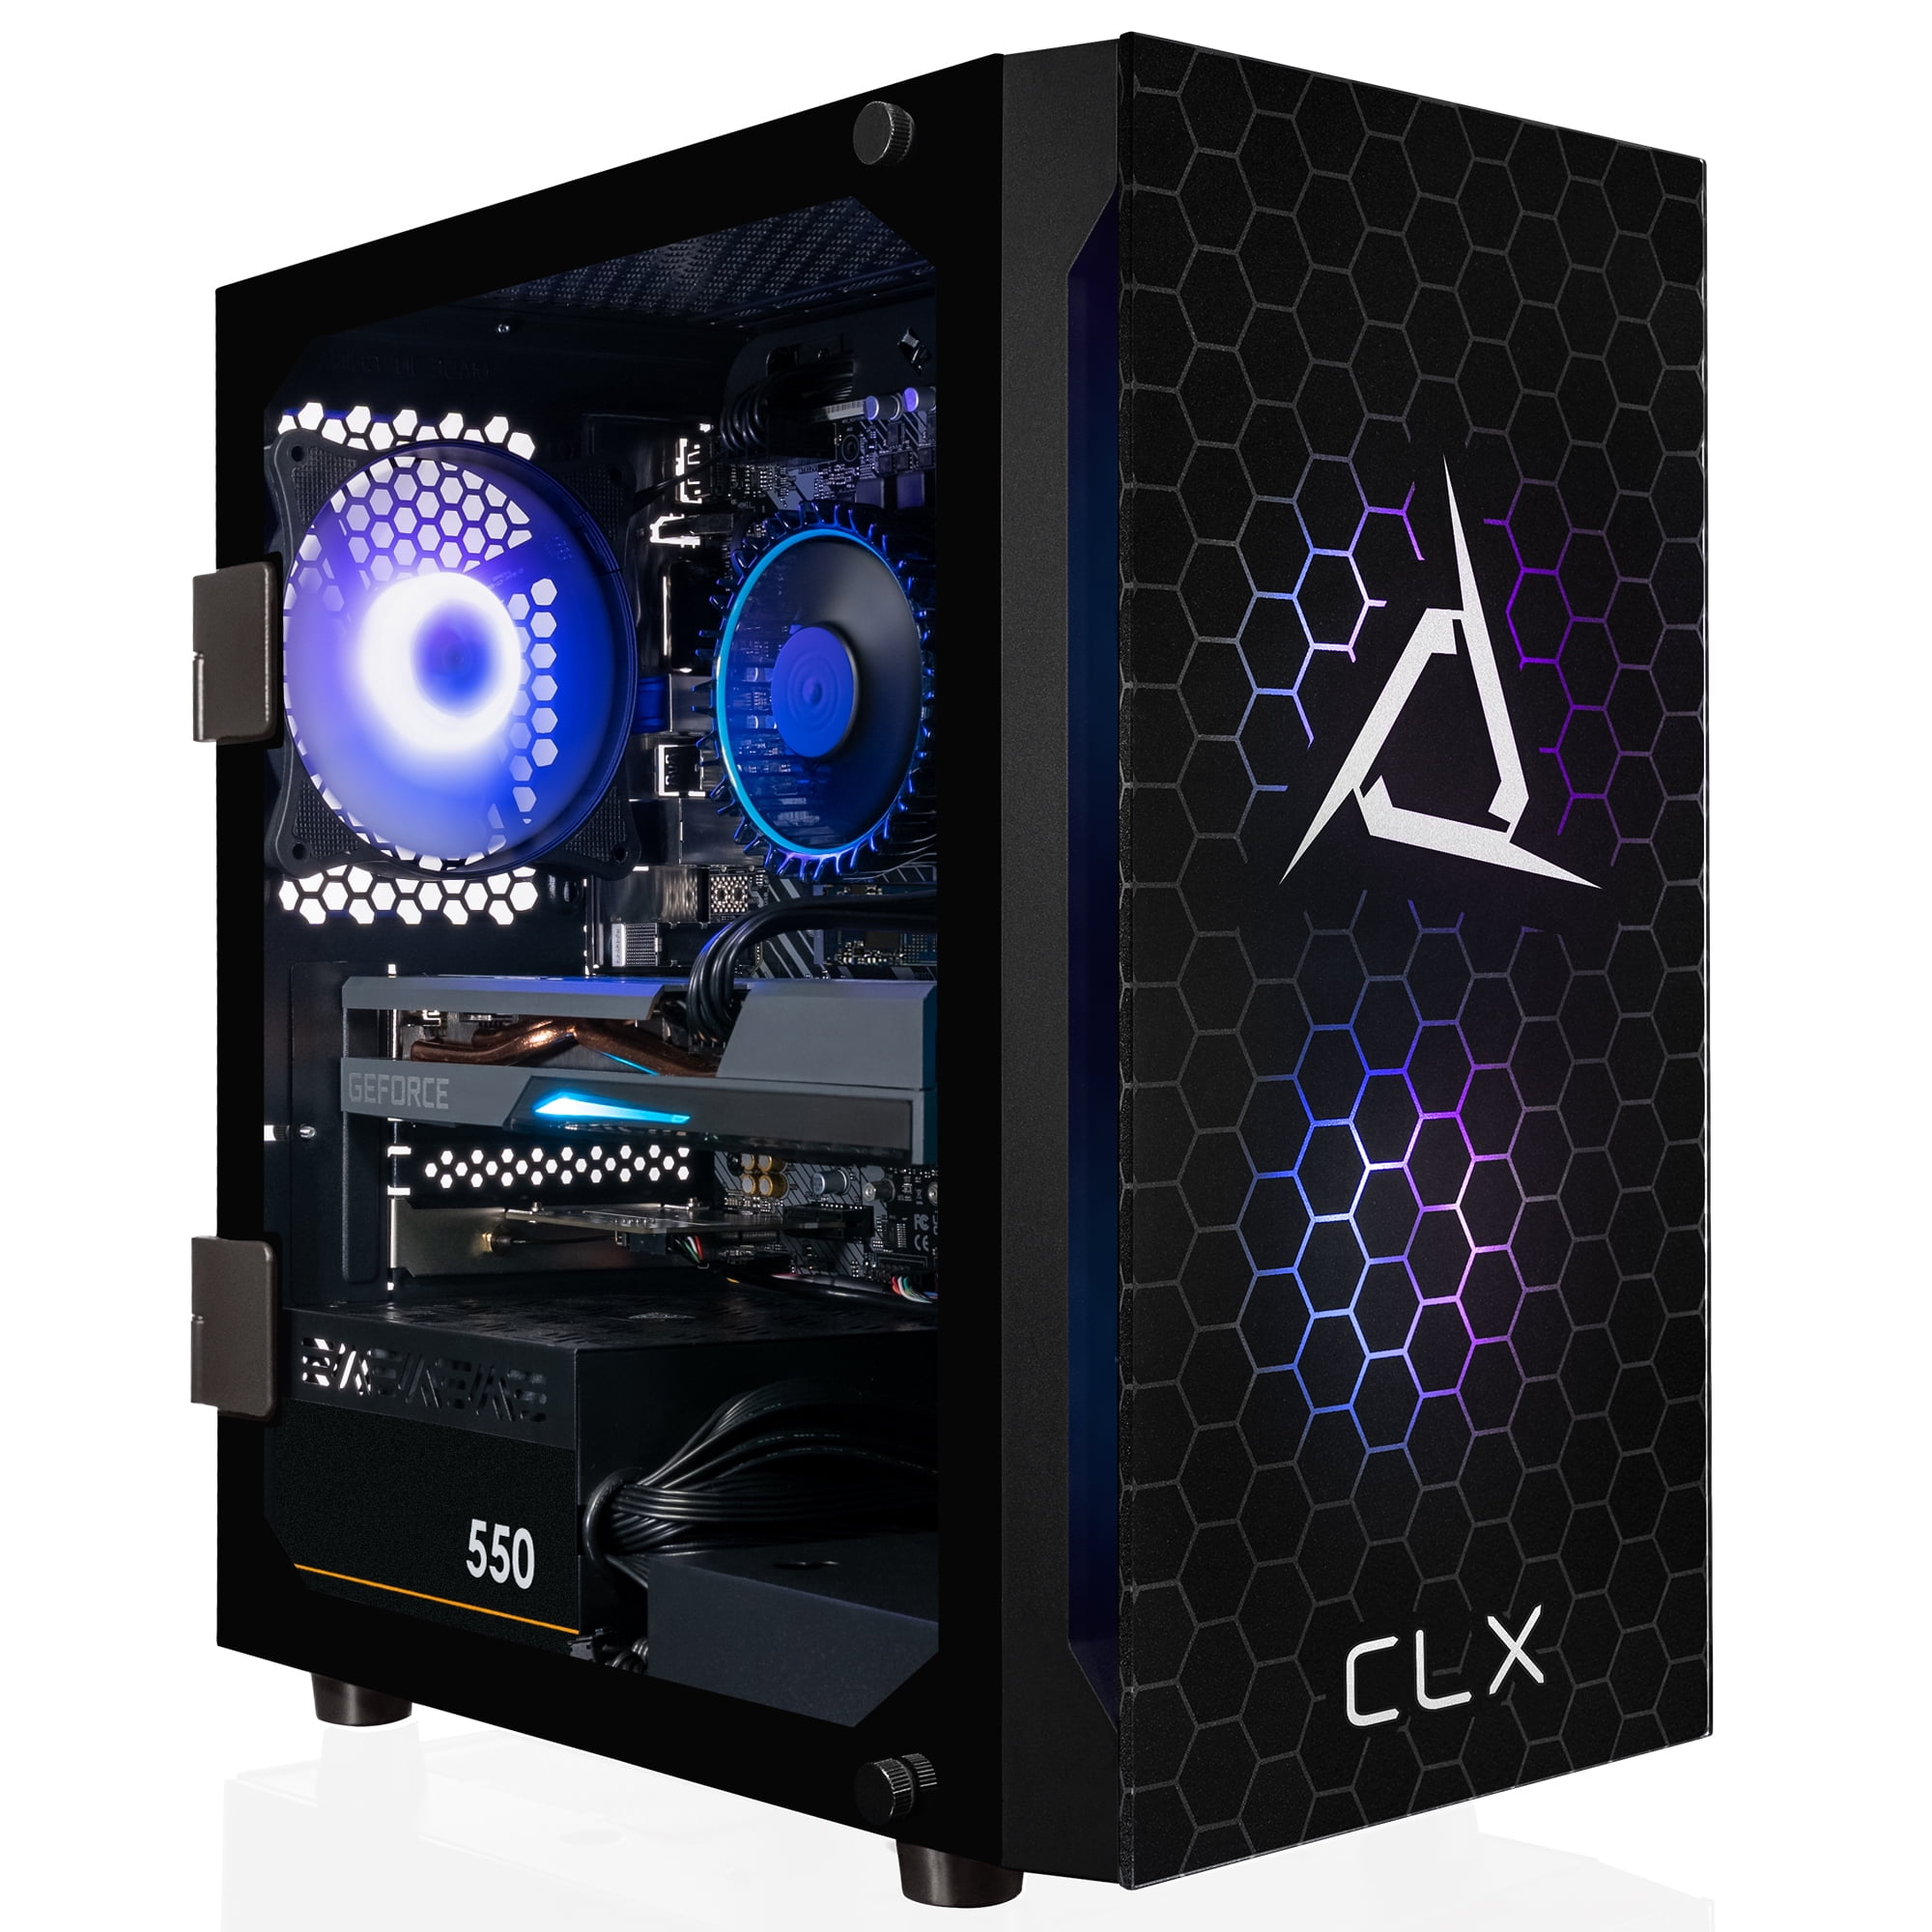 CLX SET Gaming Desktop - Intel Core i5 12400F 2.5GHz 6-Core Processor, 16GB  DDR4 Memory, GeForce RTX 3050 8GB GDDR6 Graphics, 500GB SSD, 2TB HDD,